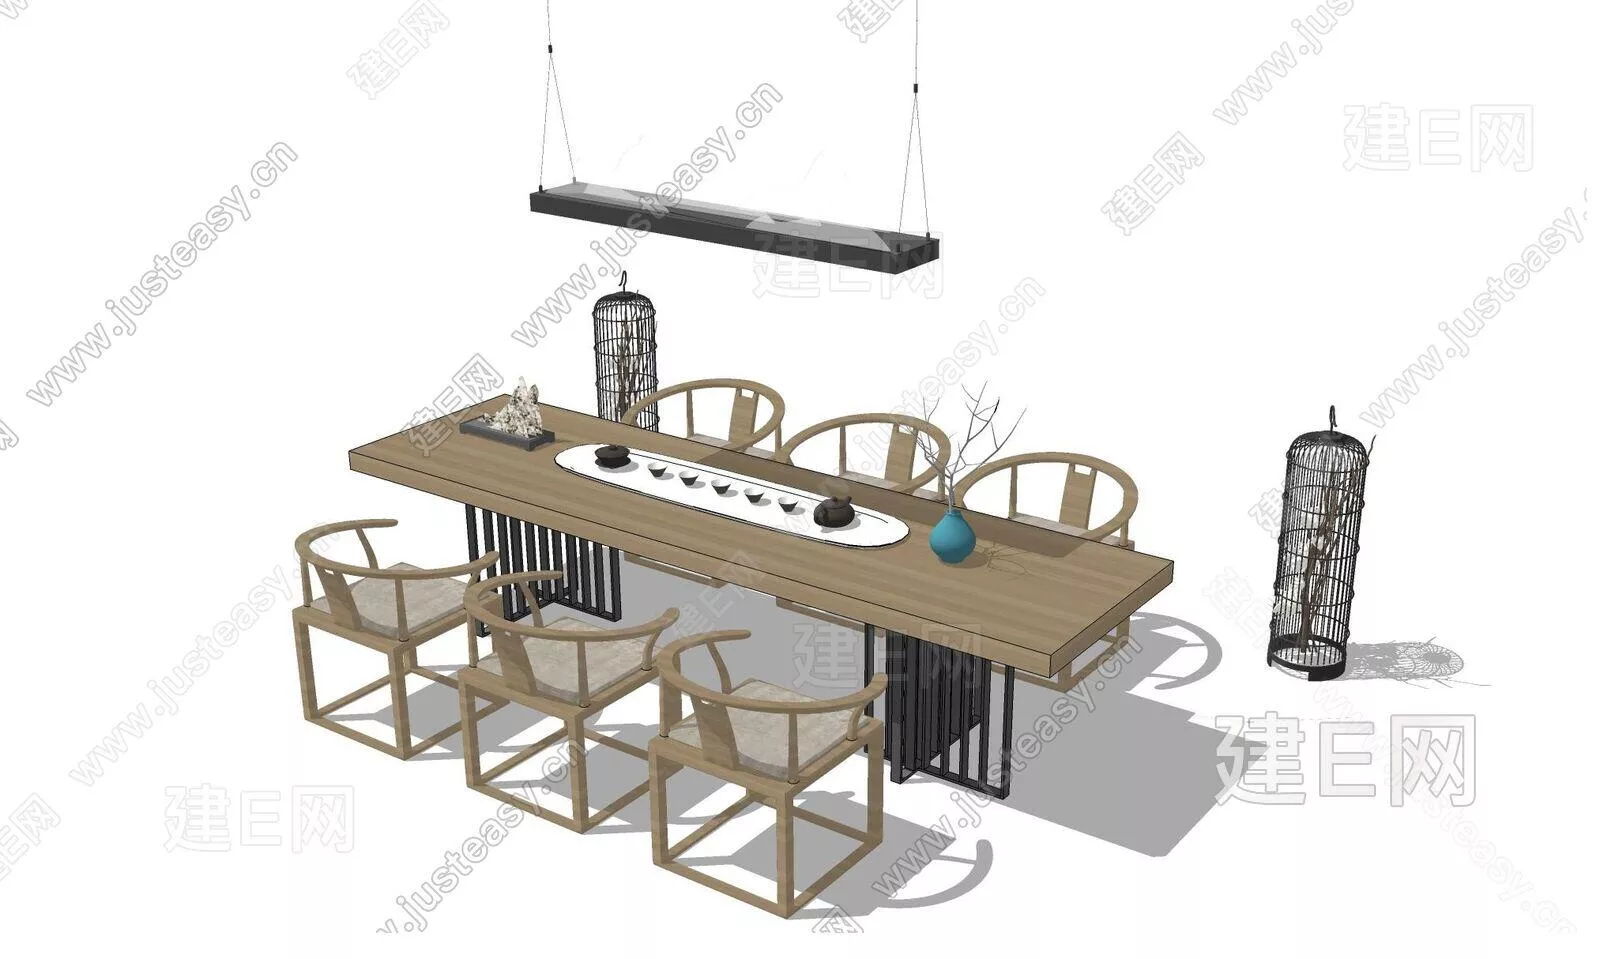 CHINESE TEA TABLE SET - SKETCHUP 3D MODEL - ENSCAPE - 112542004